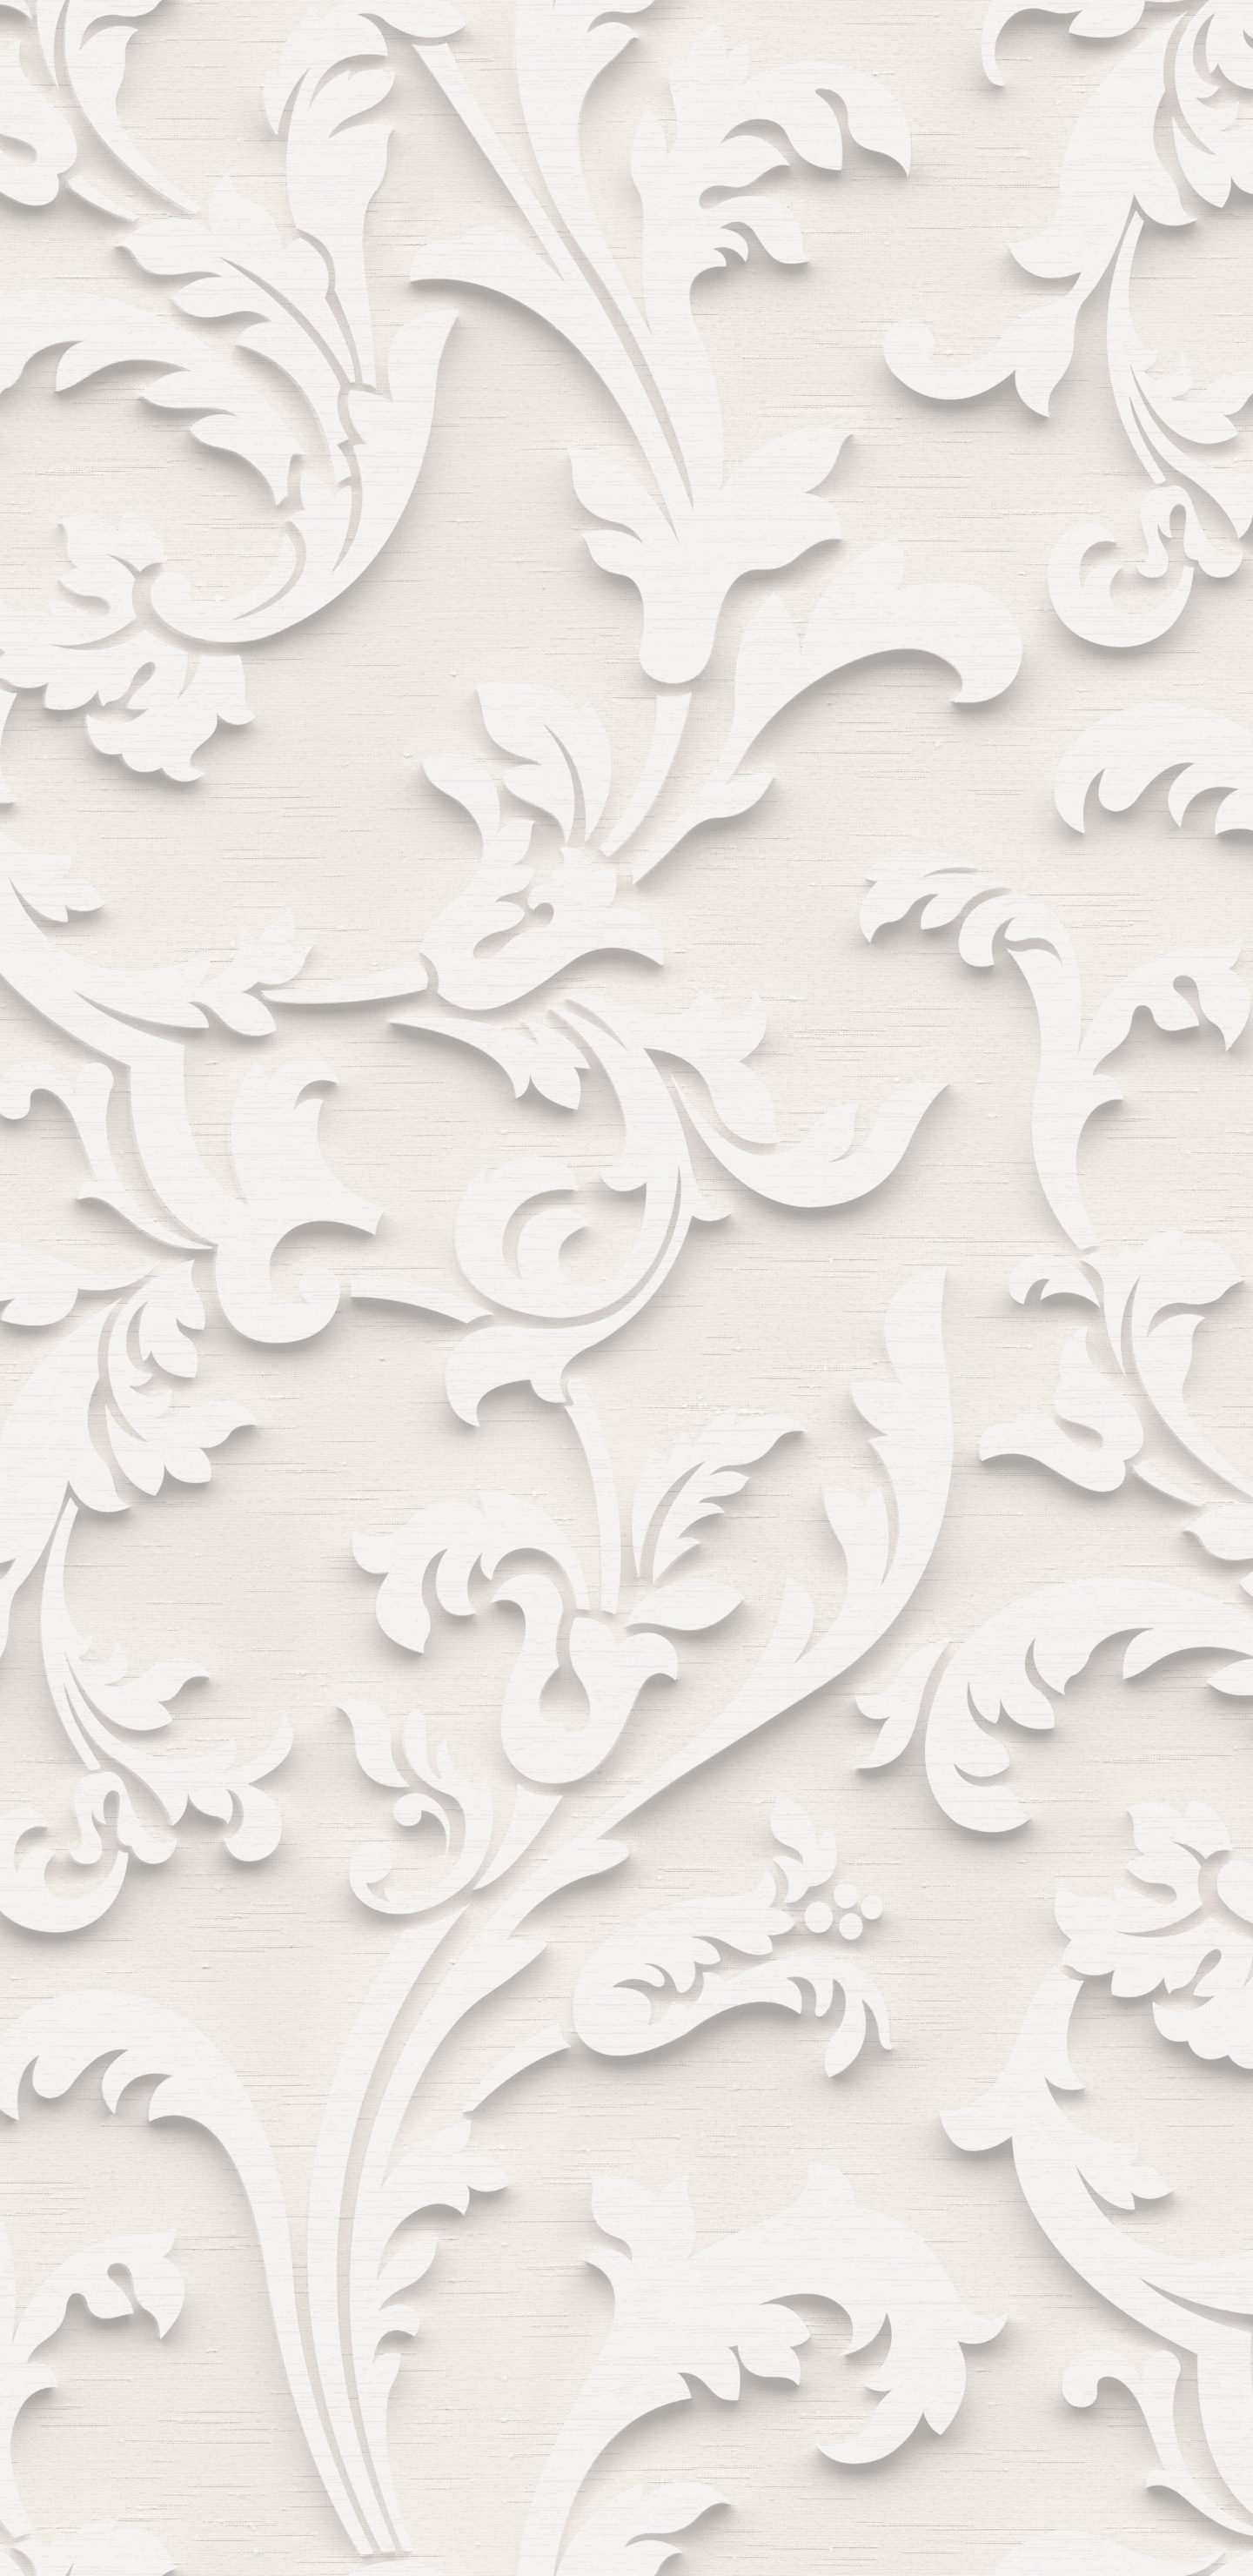 Textil Floral Blanco y Gris. Wallpaper in 1440x2960 Resolution